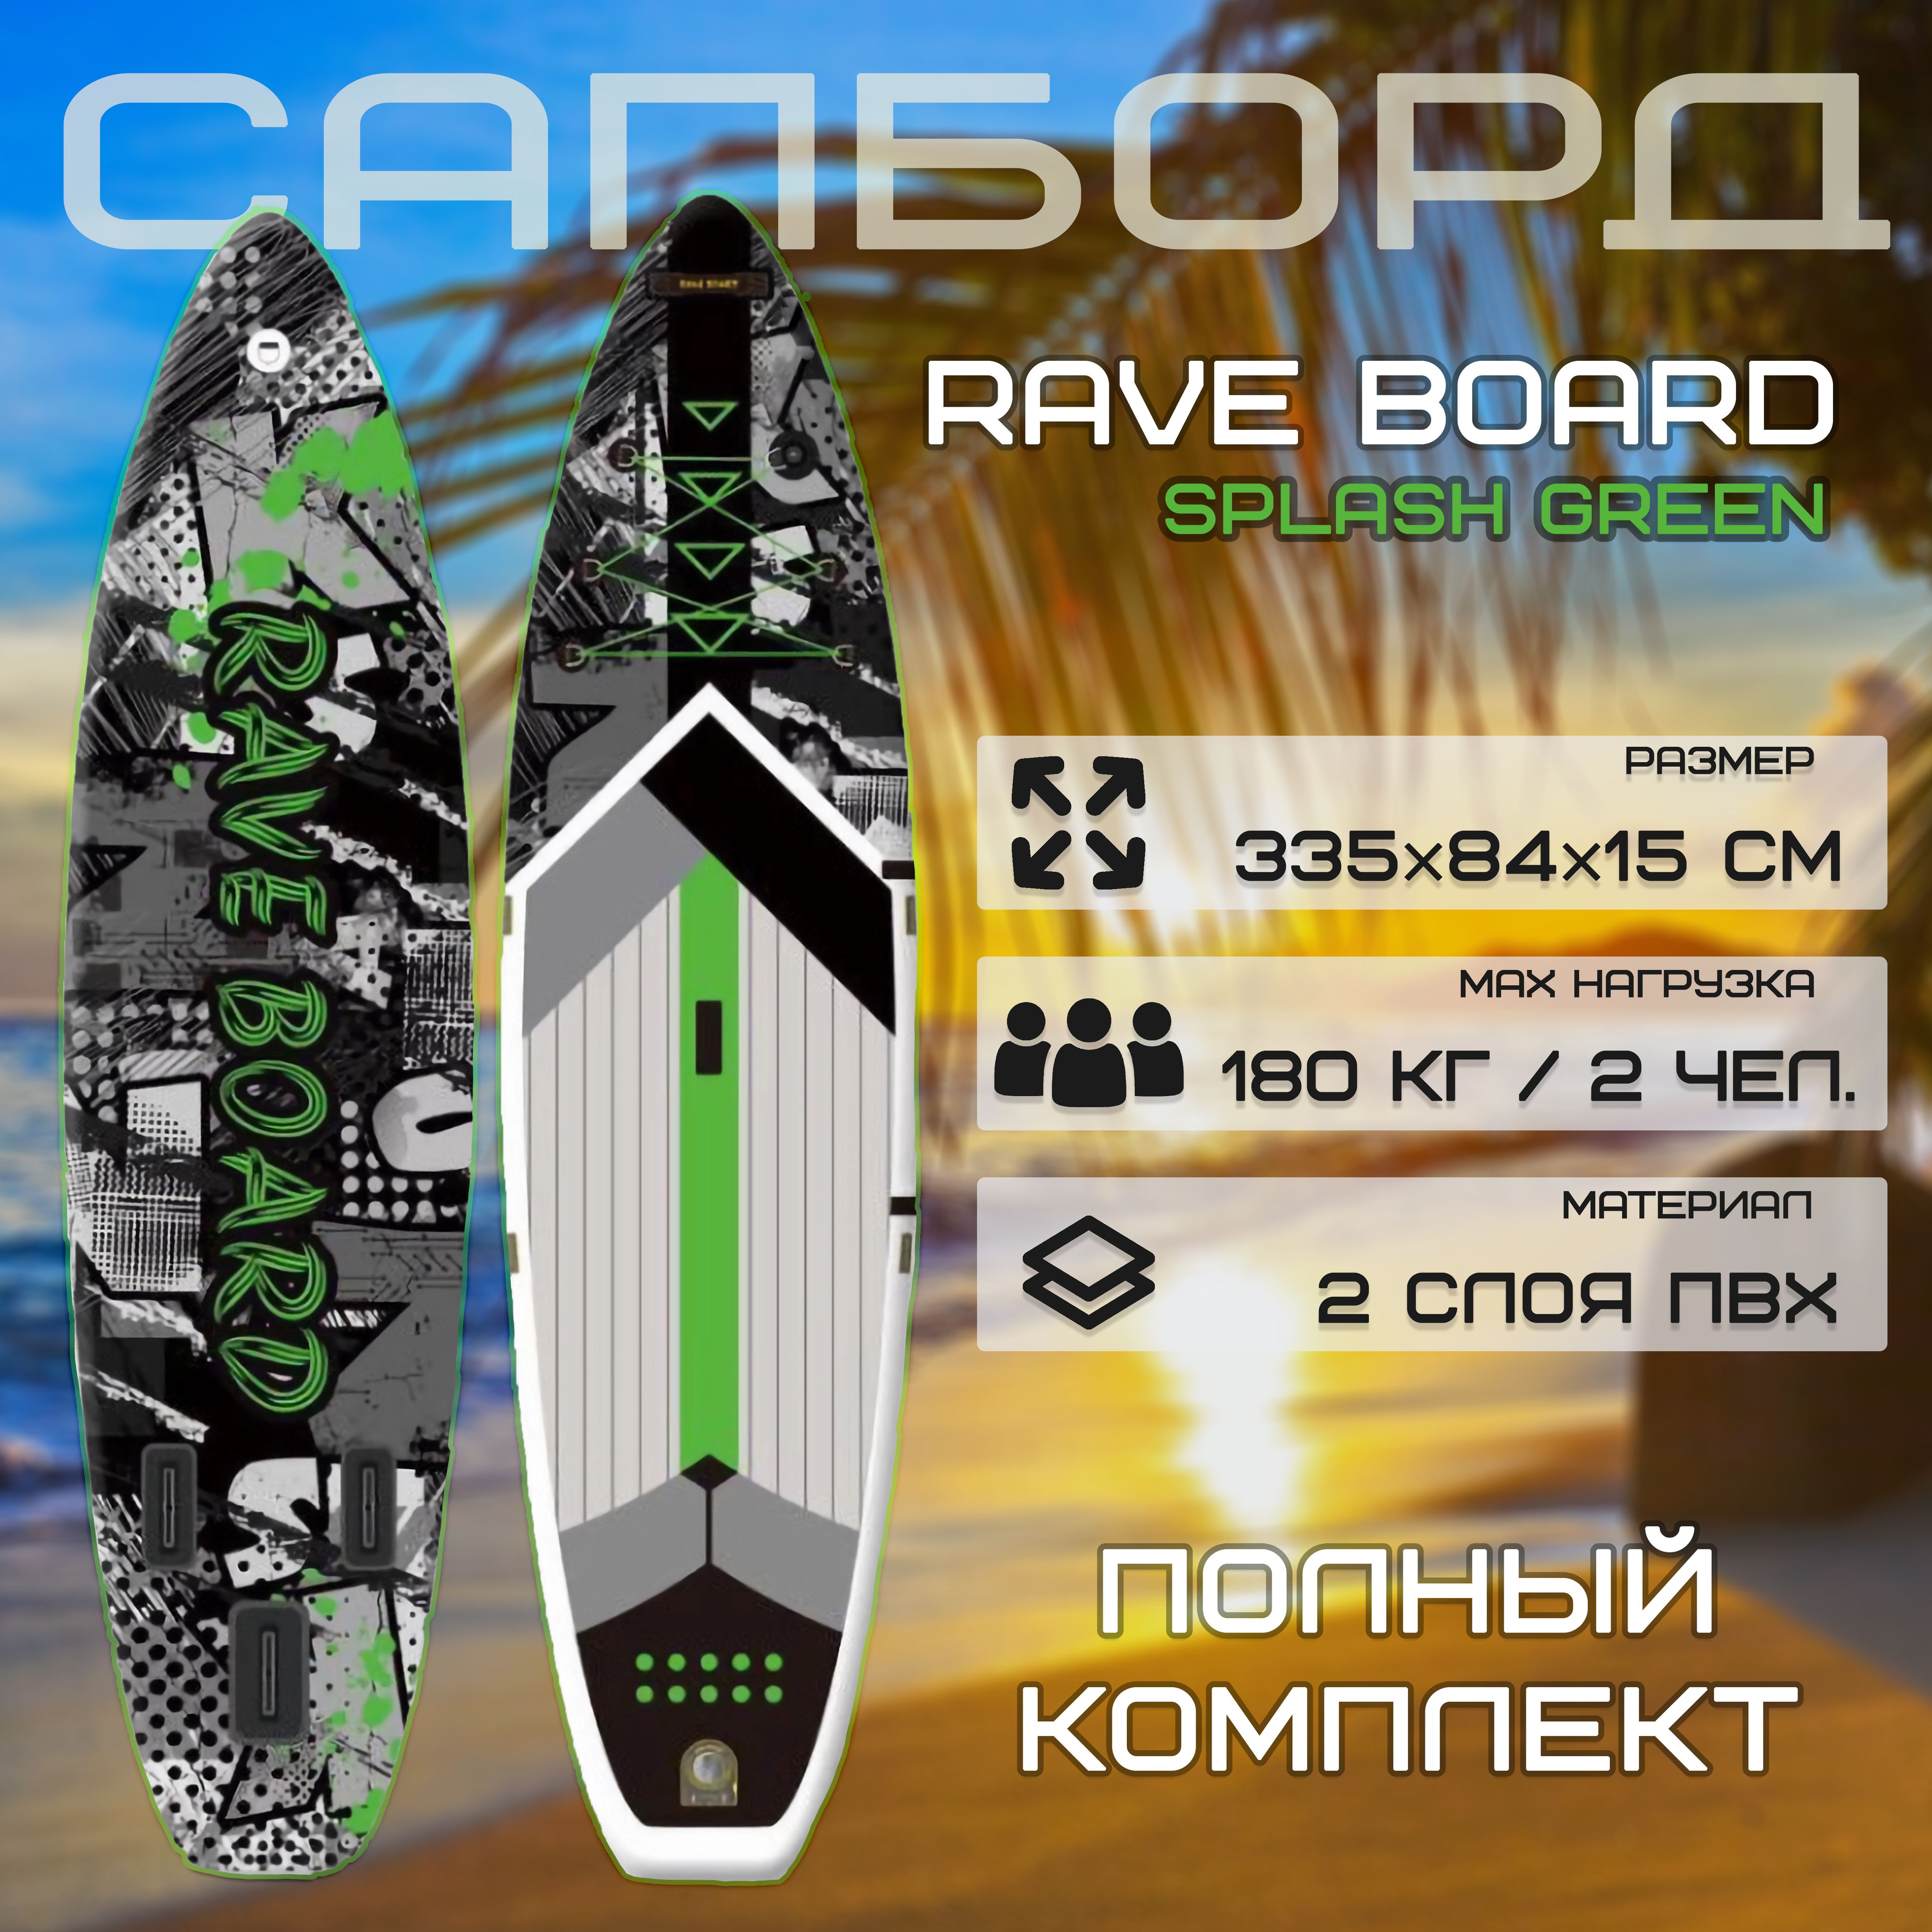 Rave board